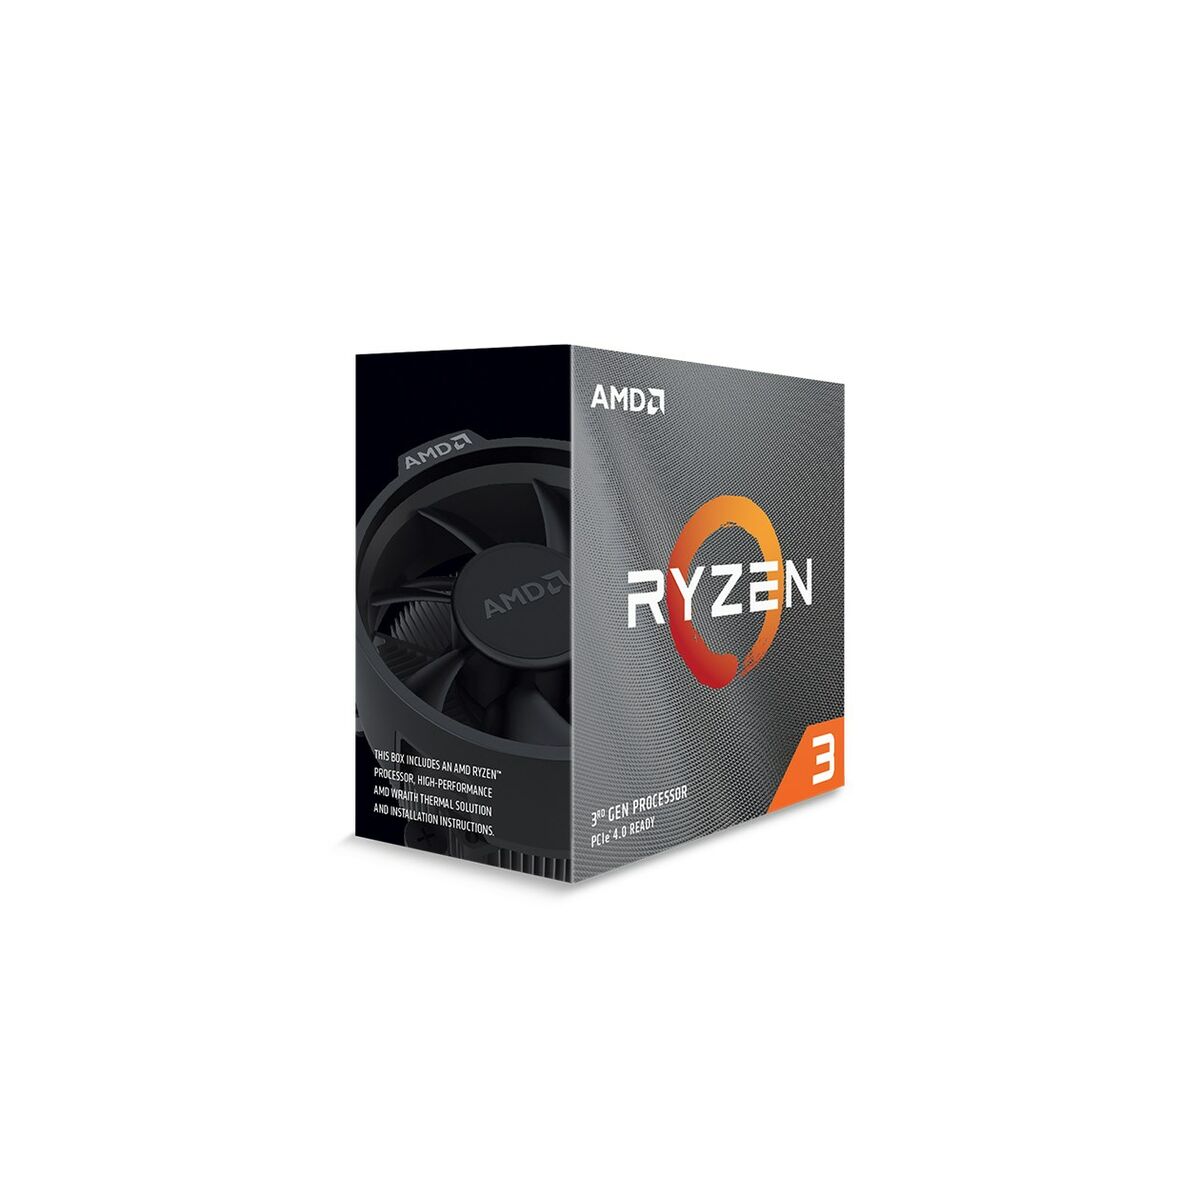 Processor AMD Ryzen 3 3100 64 bits AMD AM4-1